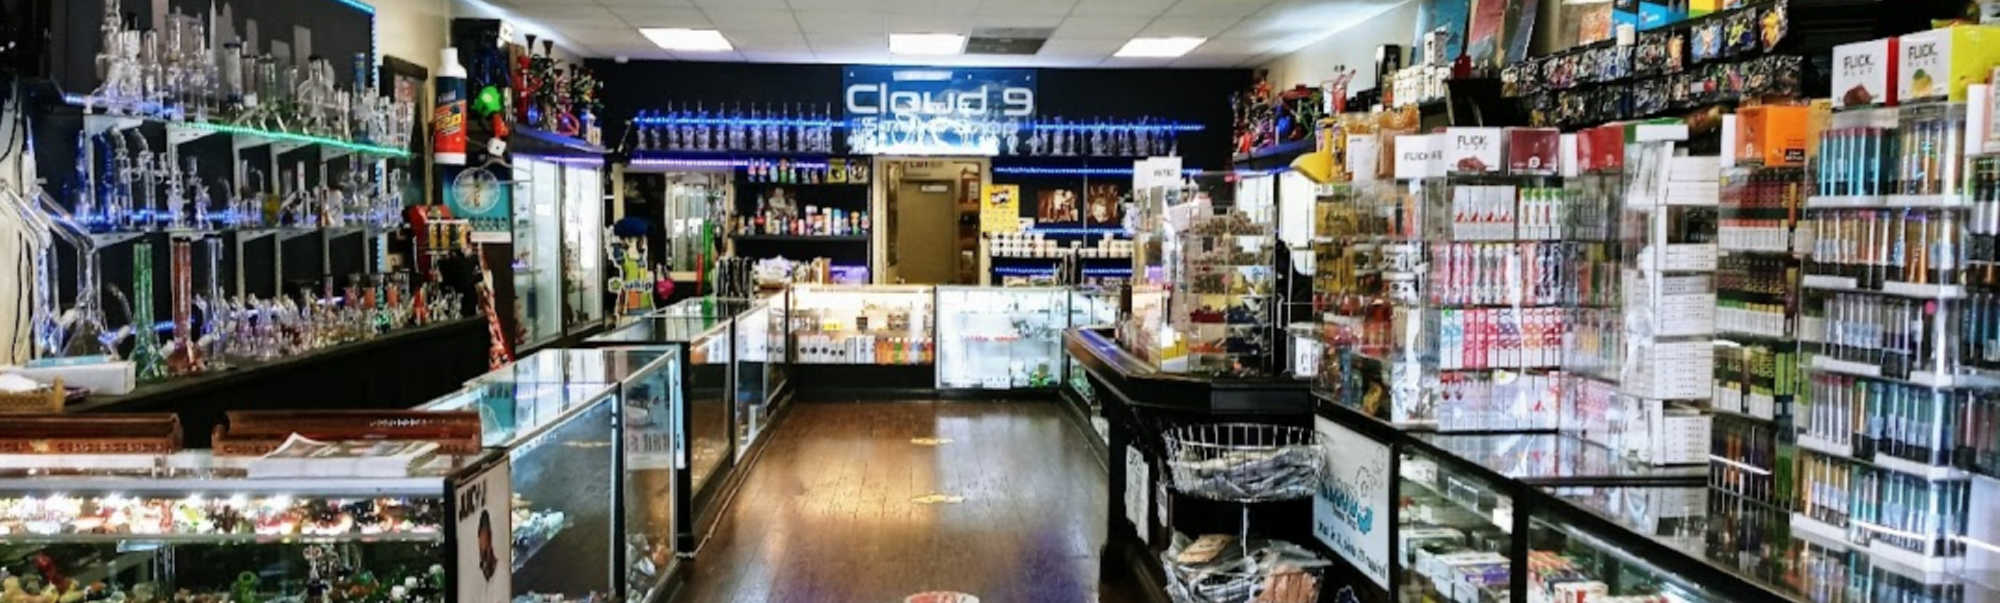 image of cloud 9 smoke shop in lincoln ne